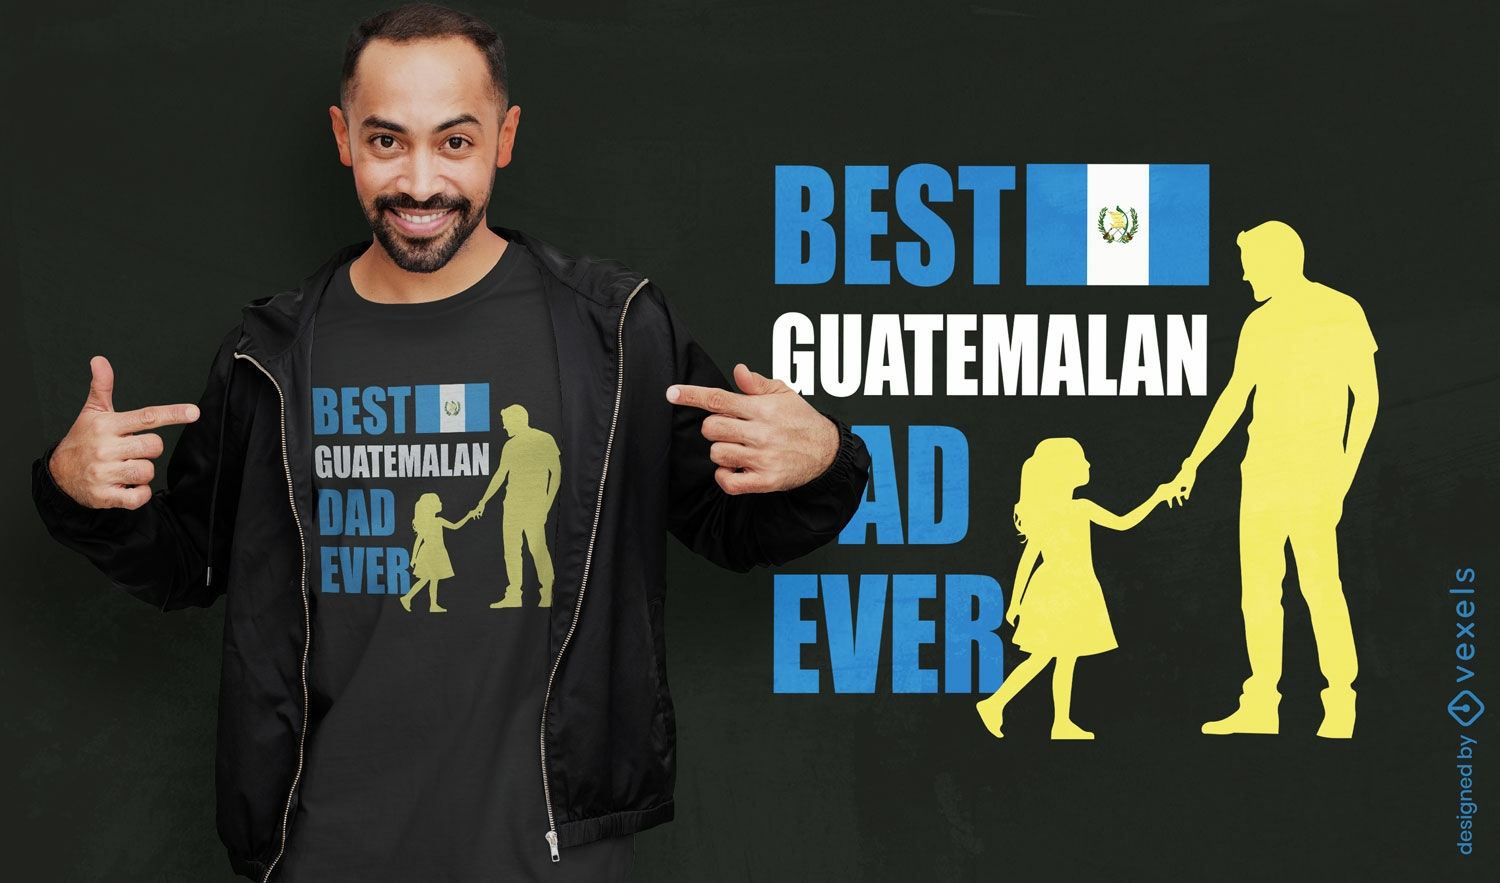 Dise?o de camiseta de padre guatemalteco.